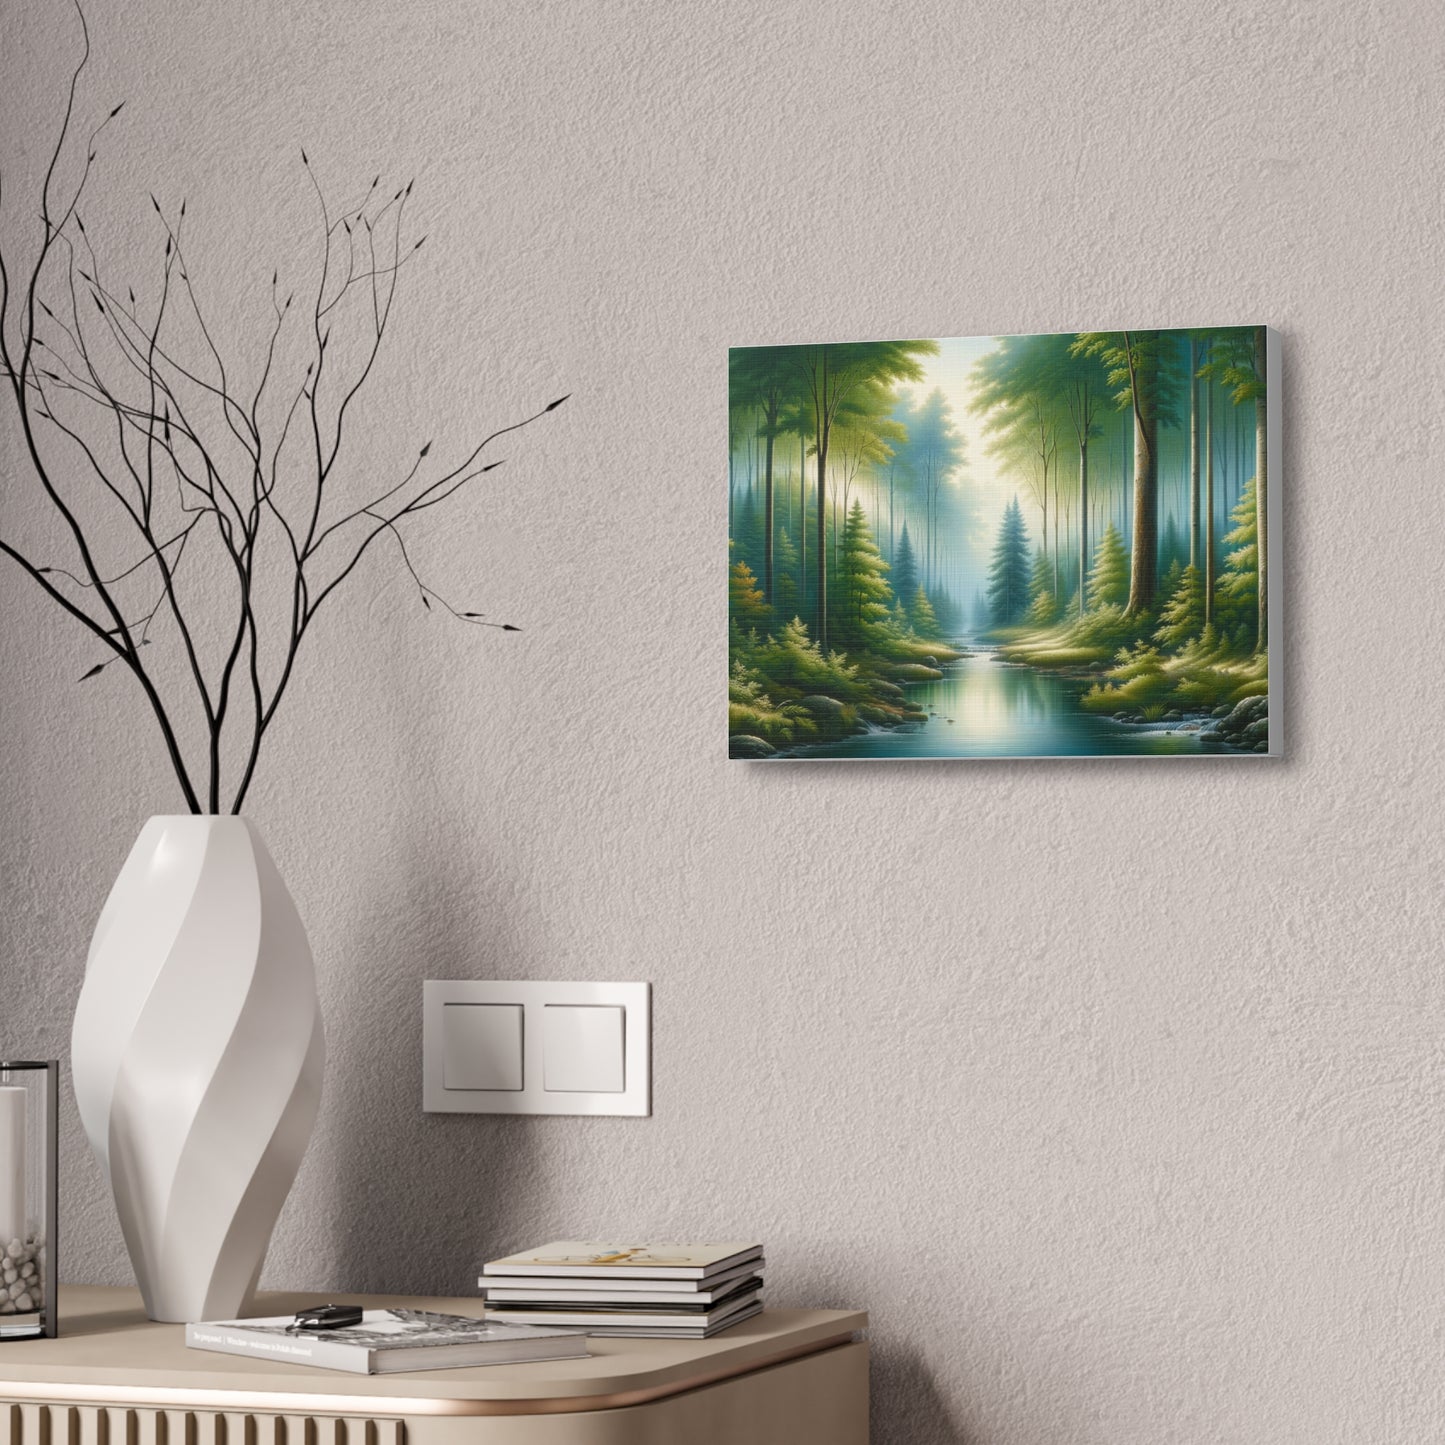 Enchanted Forest Stream: Serene Landscape Canvas Art